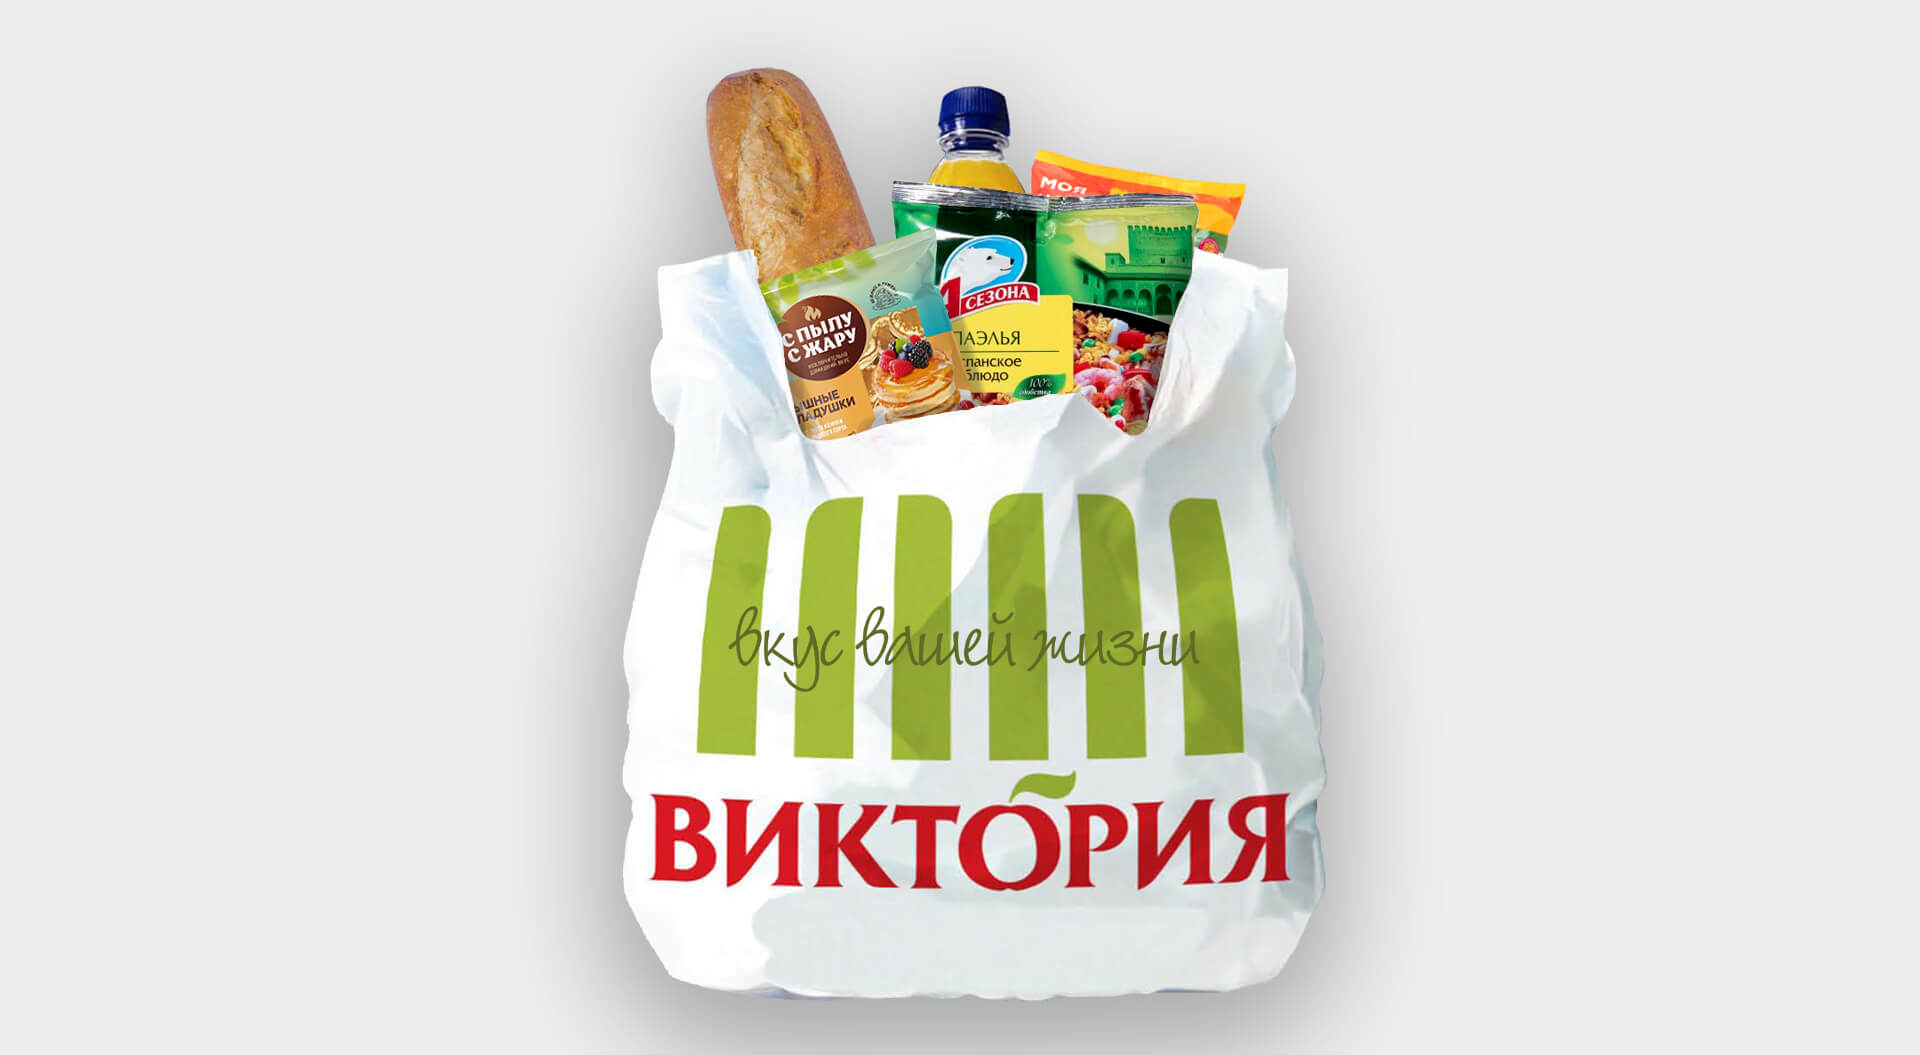 Victoria supermarket store bag design